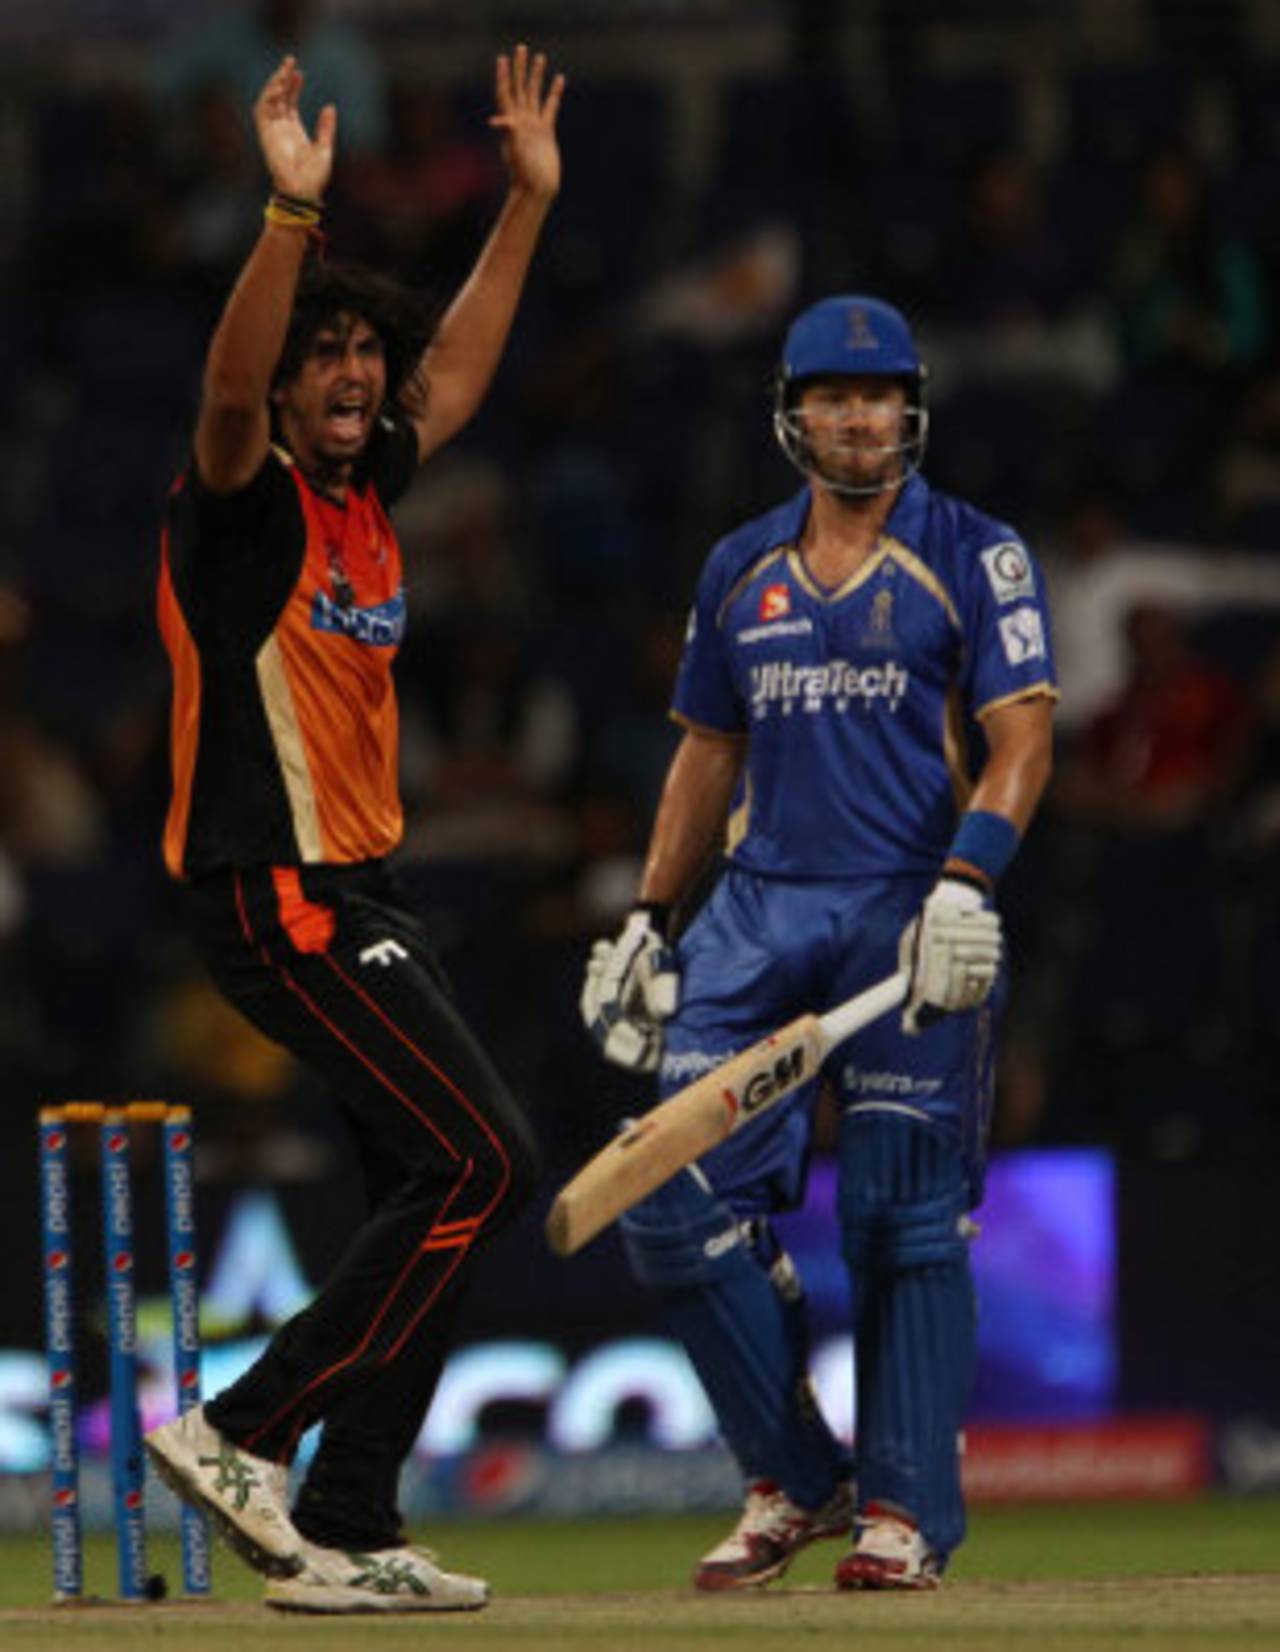 Ishant Sharma removed Shane Watson with a ripper, Sunrisers Hyderabad v Rajasthan Royals, IPL 2014, Abu Dhabi, April 18, 2014